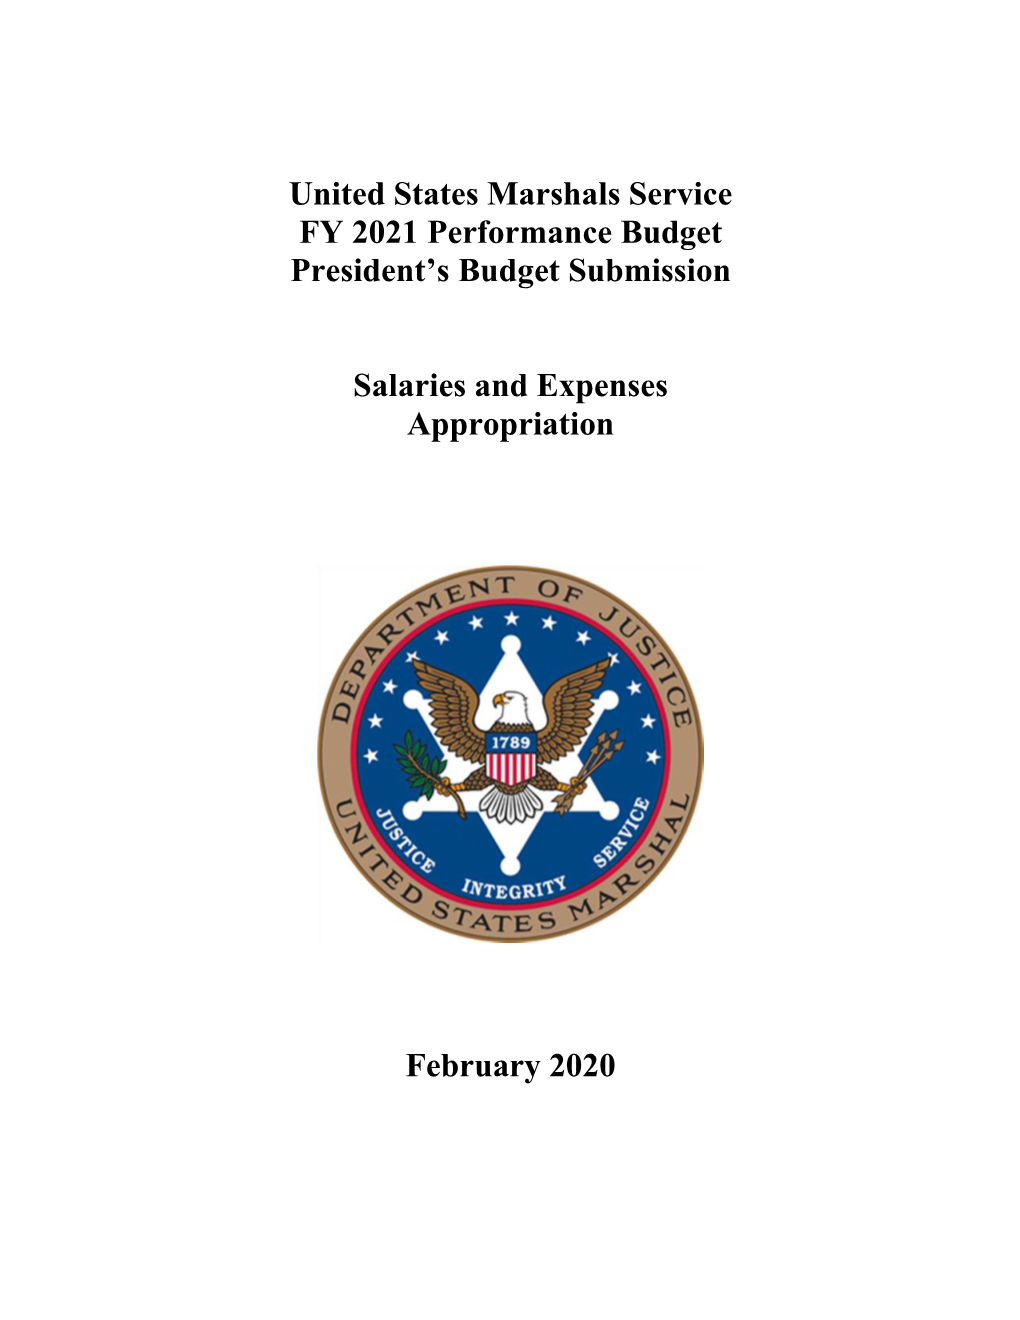 U.S. Marshals Service (USMS)